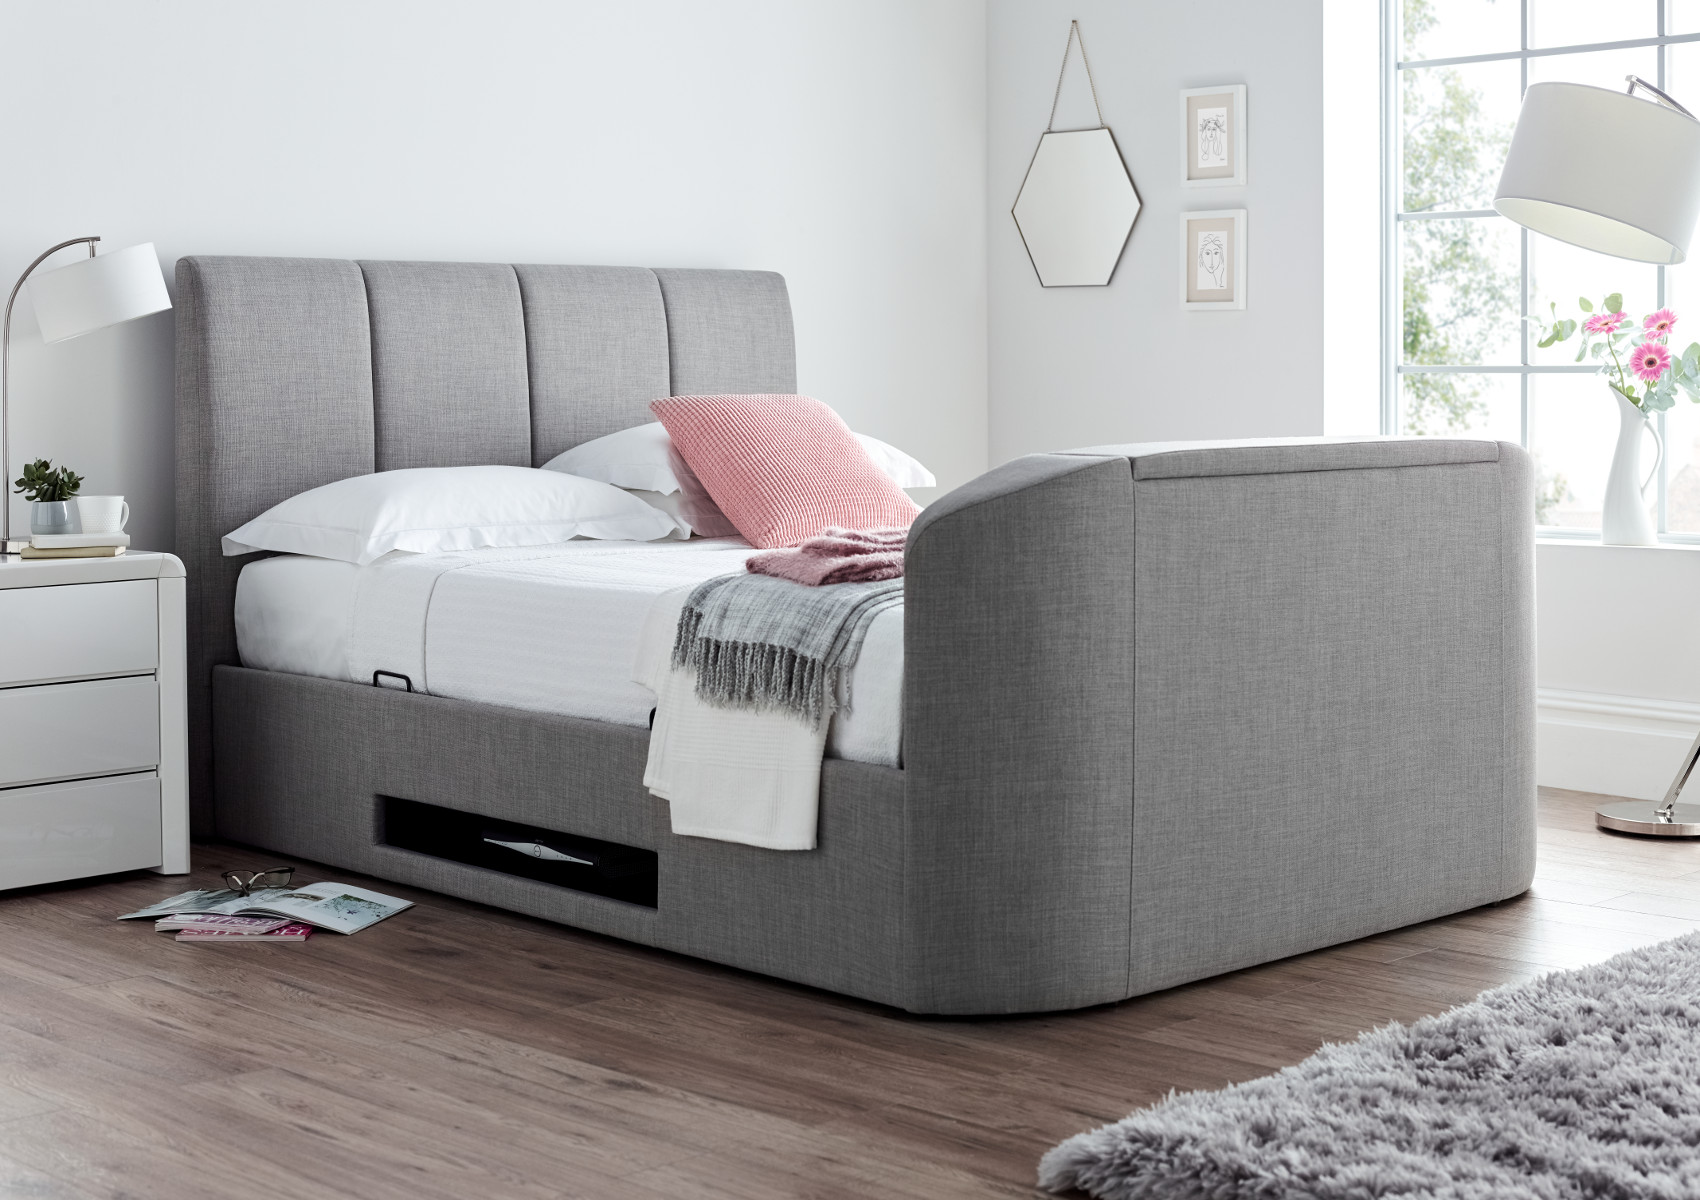 View Copenhagen Upholstered Multifunctional Ottoman Smart TV Bed Mid Grey Time4Sleep information